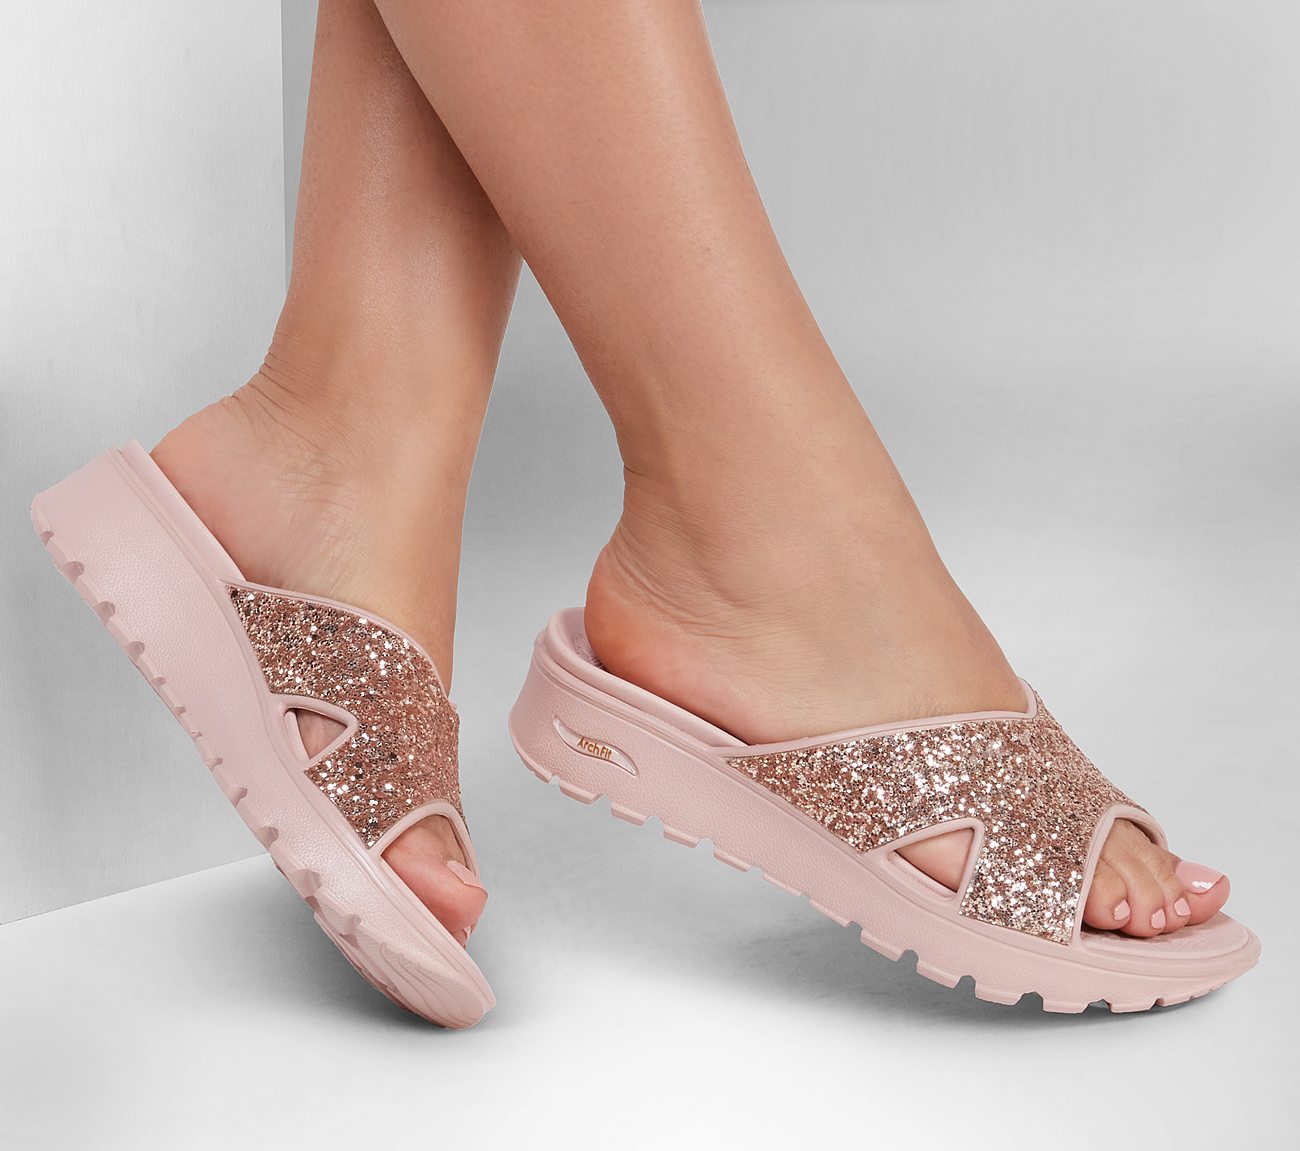 Foamies: Arch Fit Footsteps - Dazzled Girl Sandal Skechers